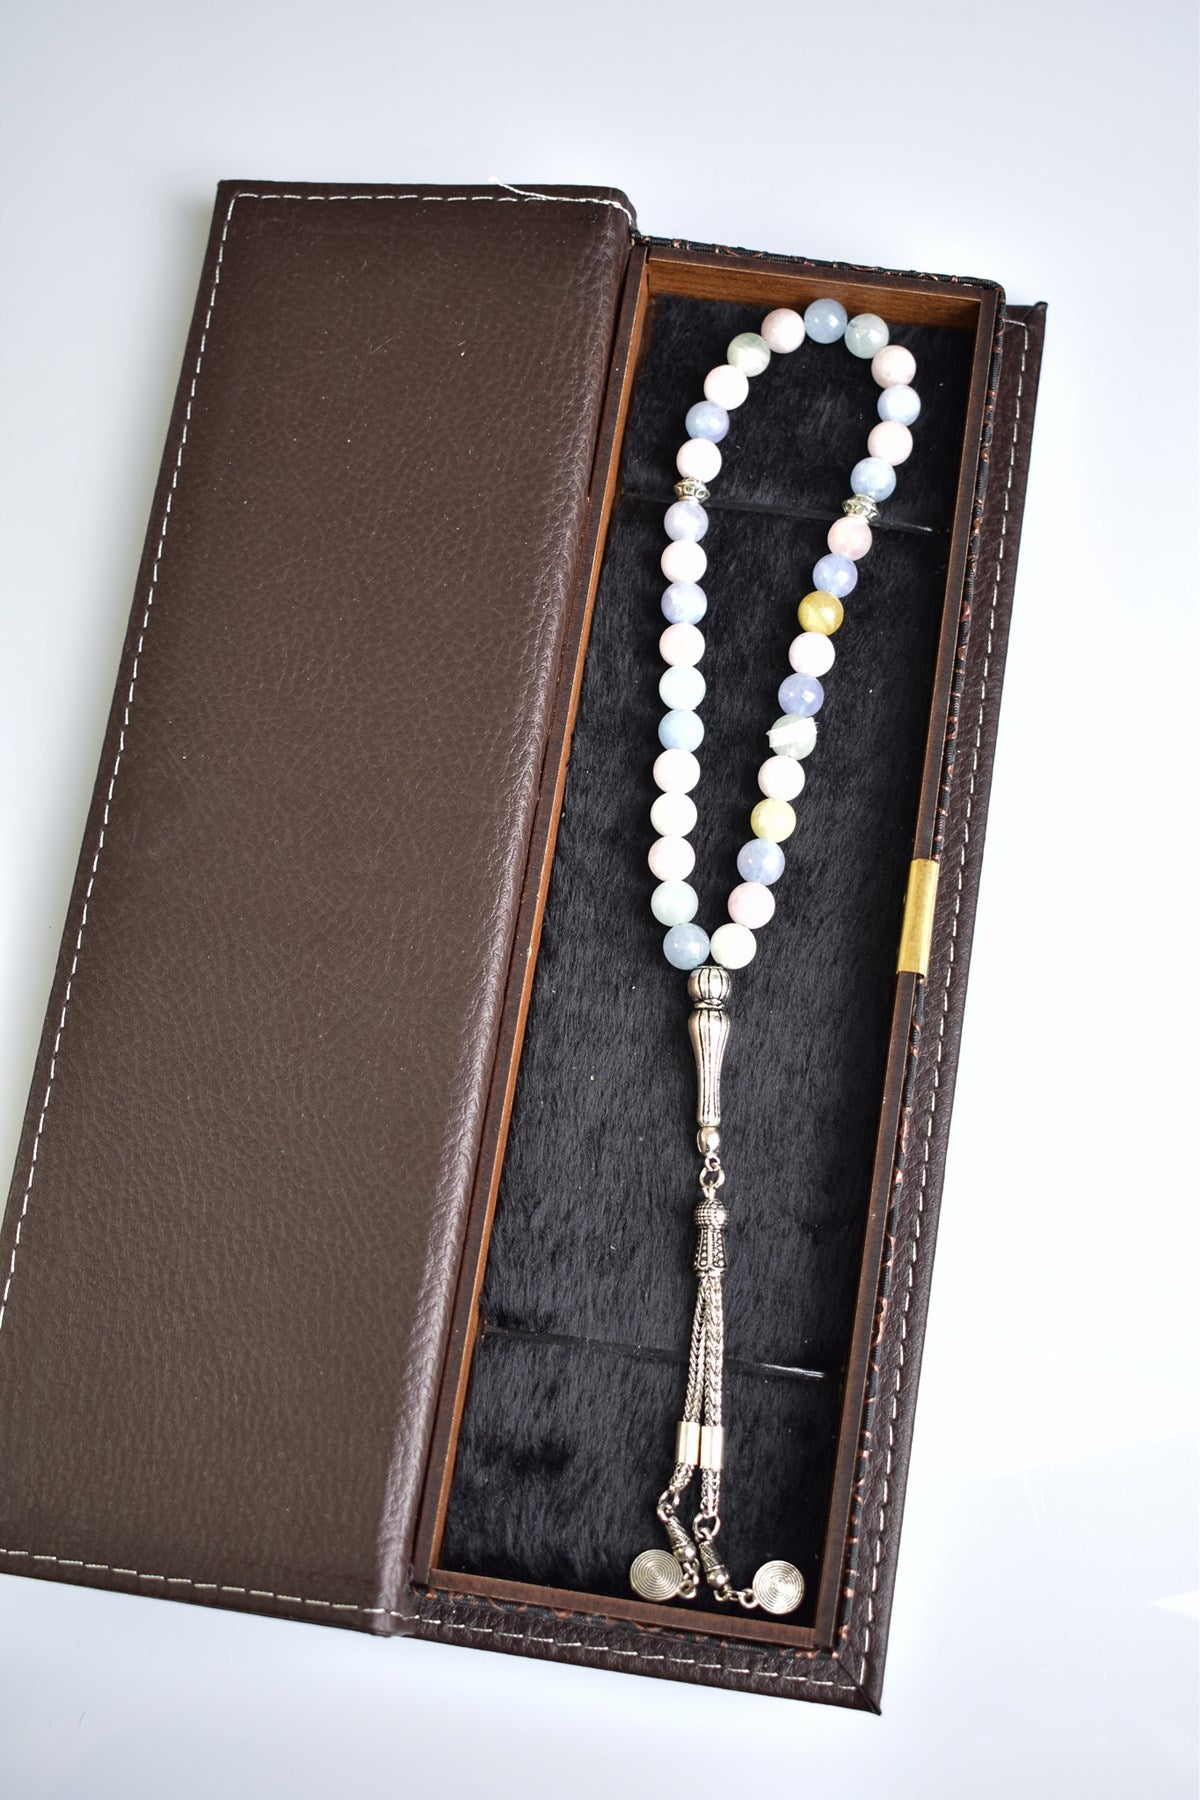 Beryl Gemstone Prayer Beads - 8mm / 33pc